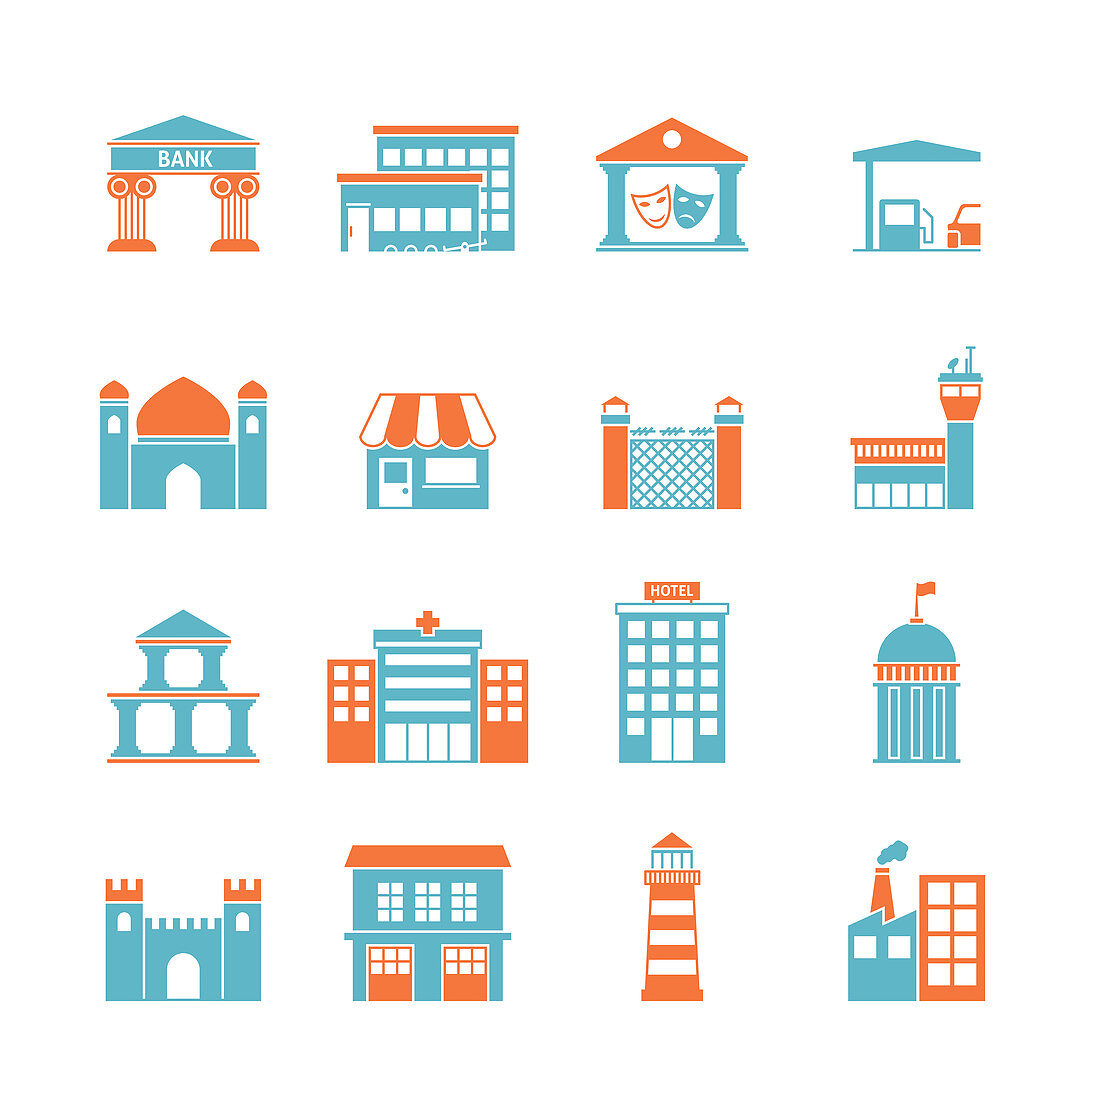 Public building icons, illustration